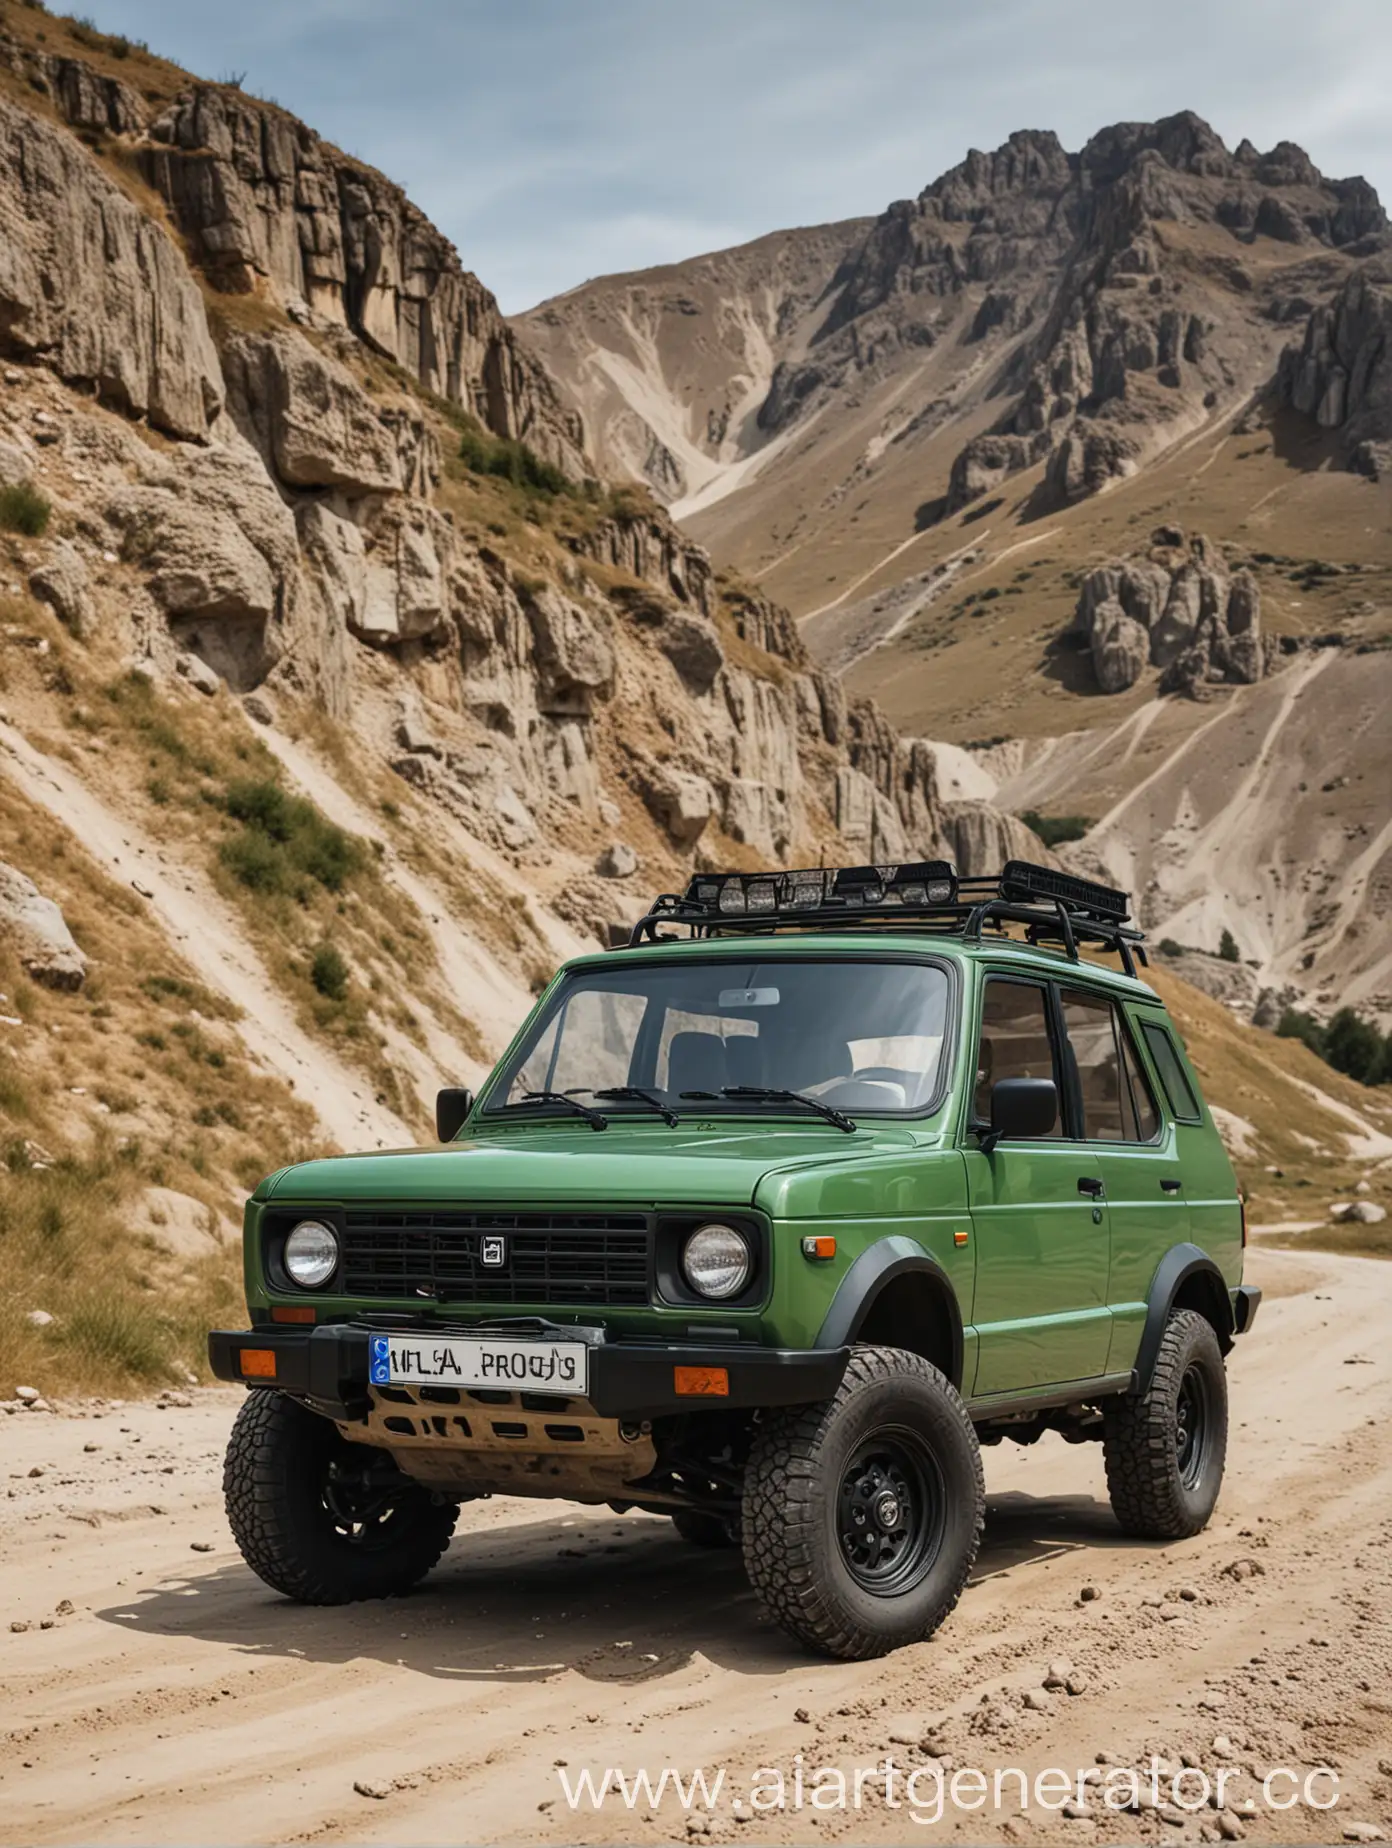 Lada-Niva-Legends-in-Green-Sandy-Mountain-Adventure-with-Headlights